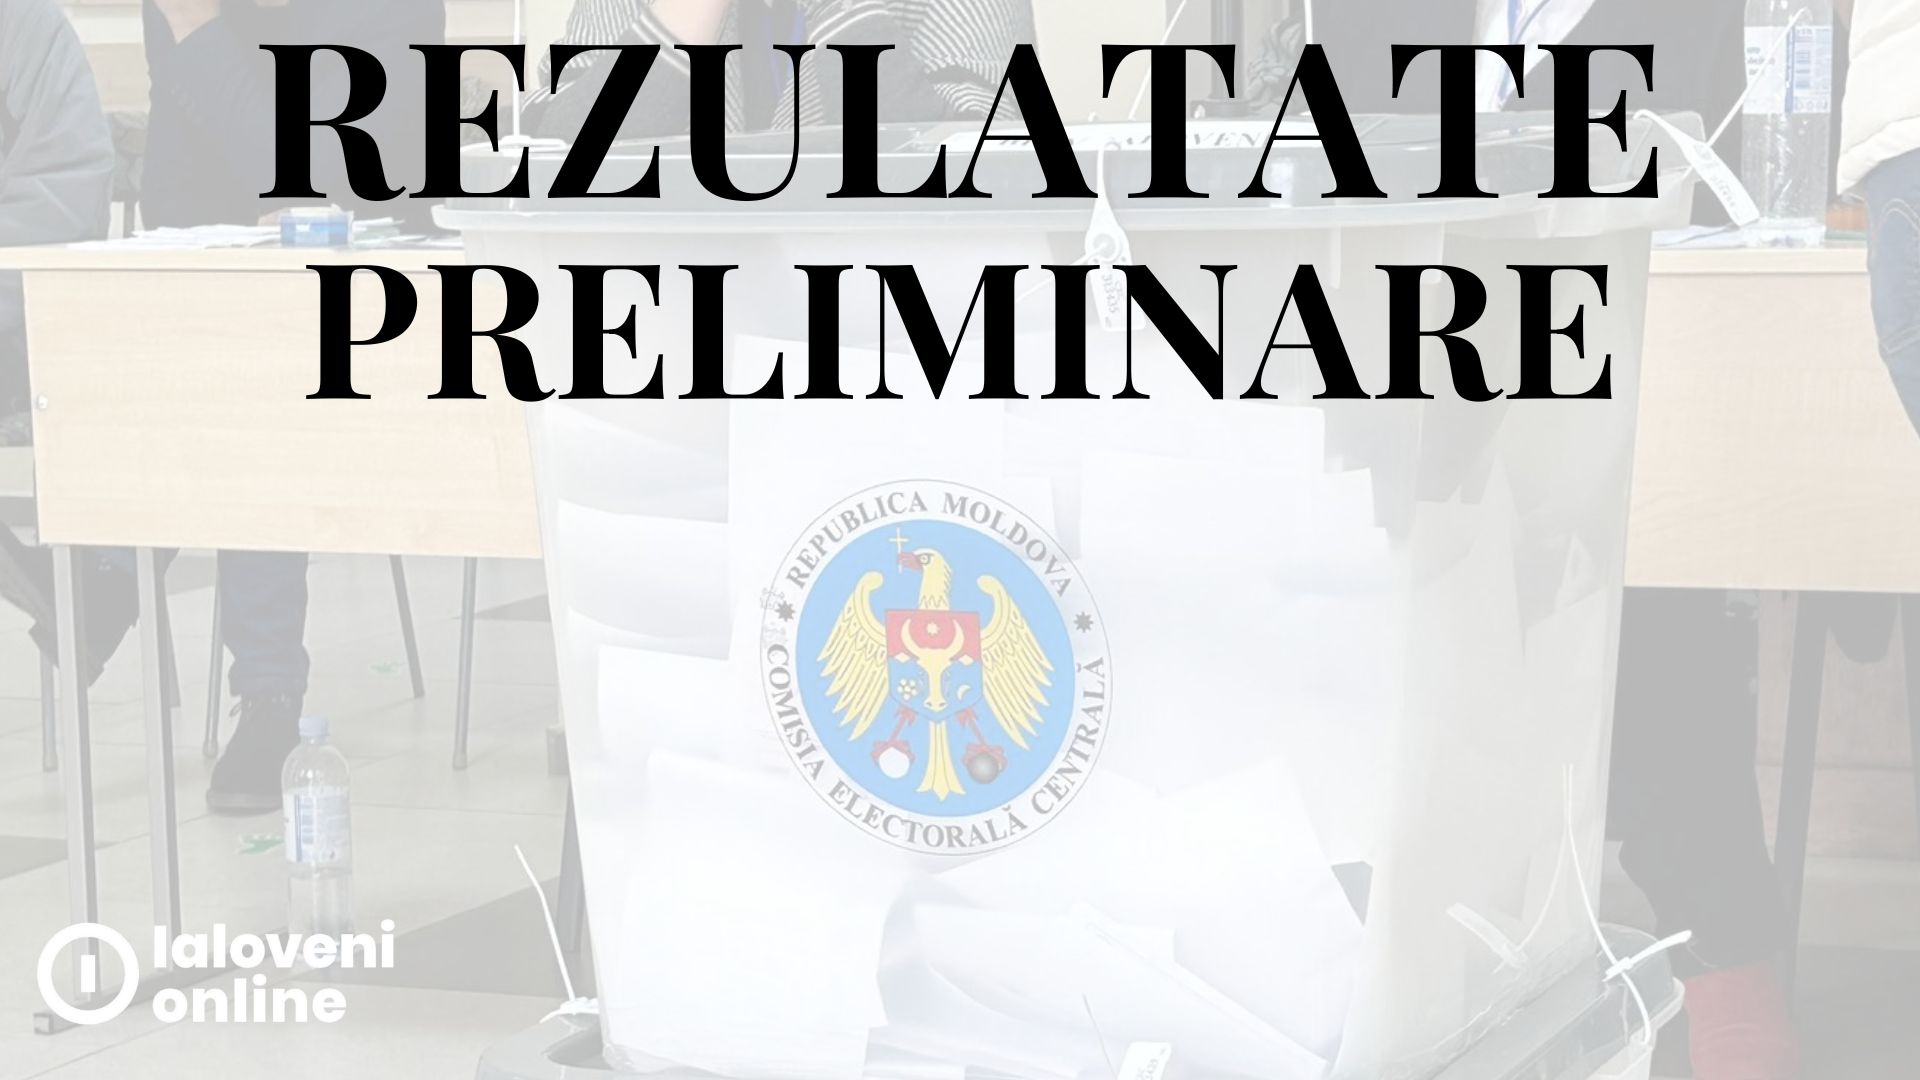 alegeri rezultate preliminare IaloveniOnline